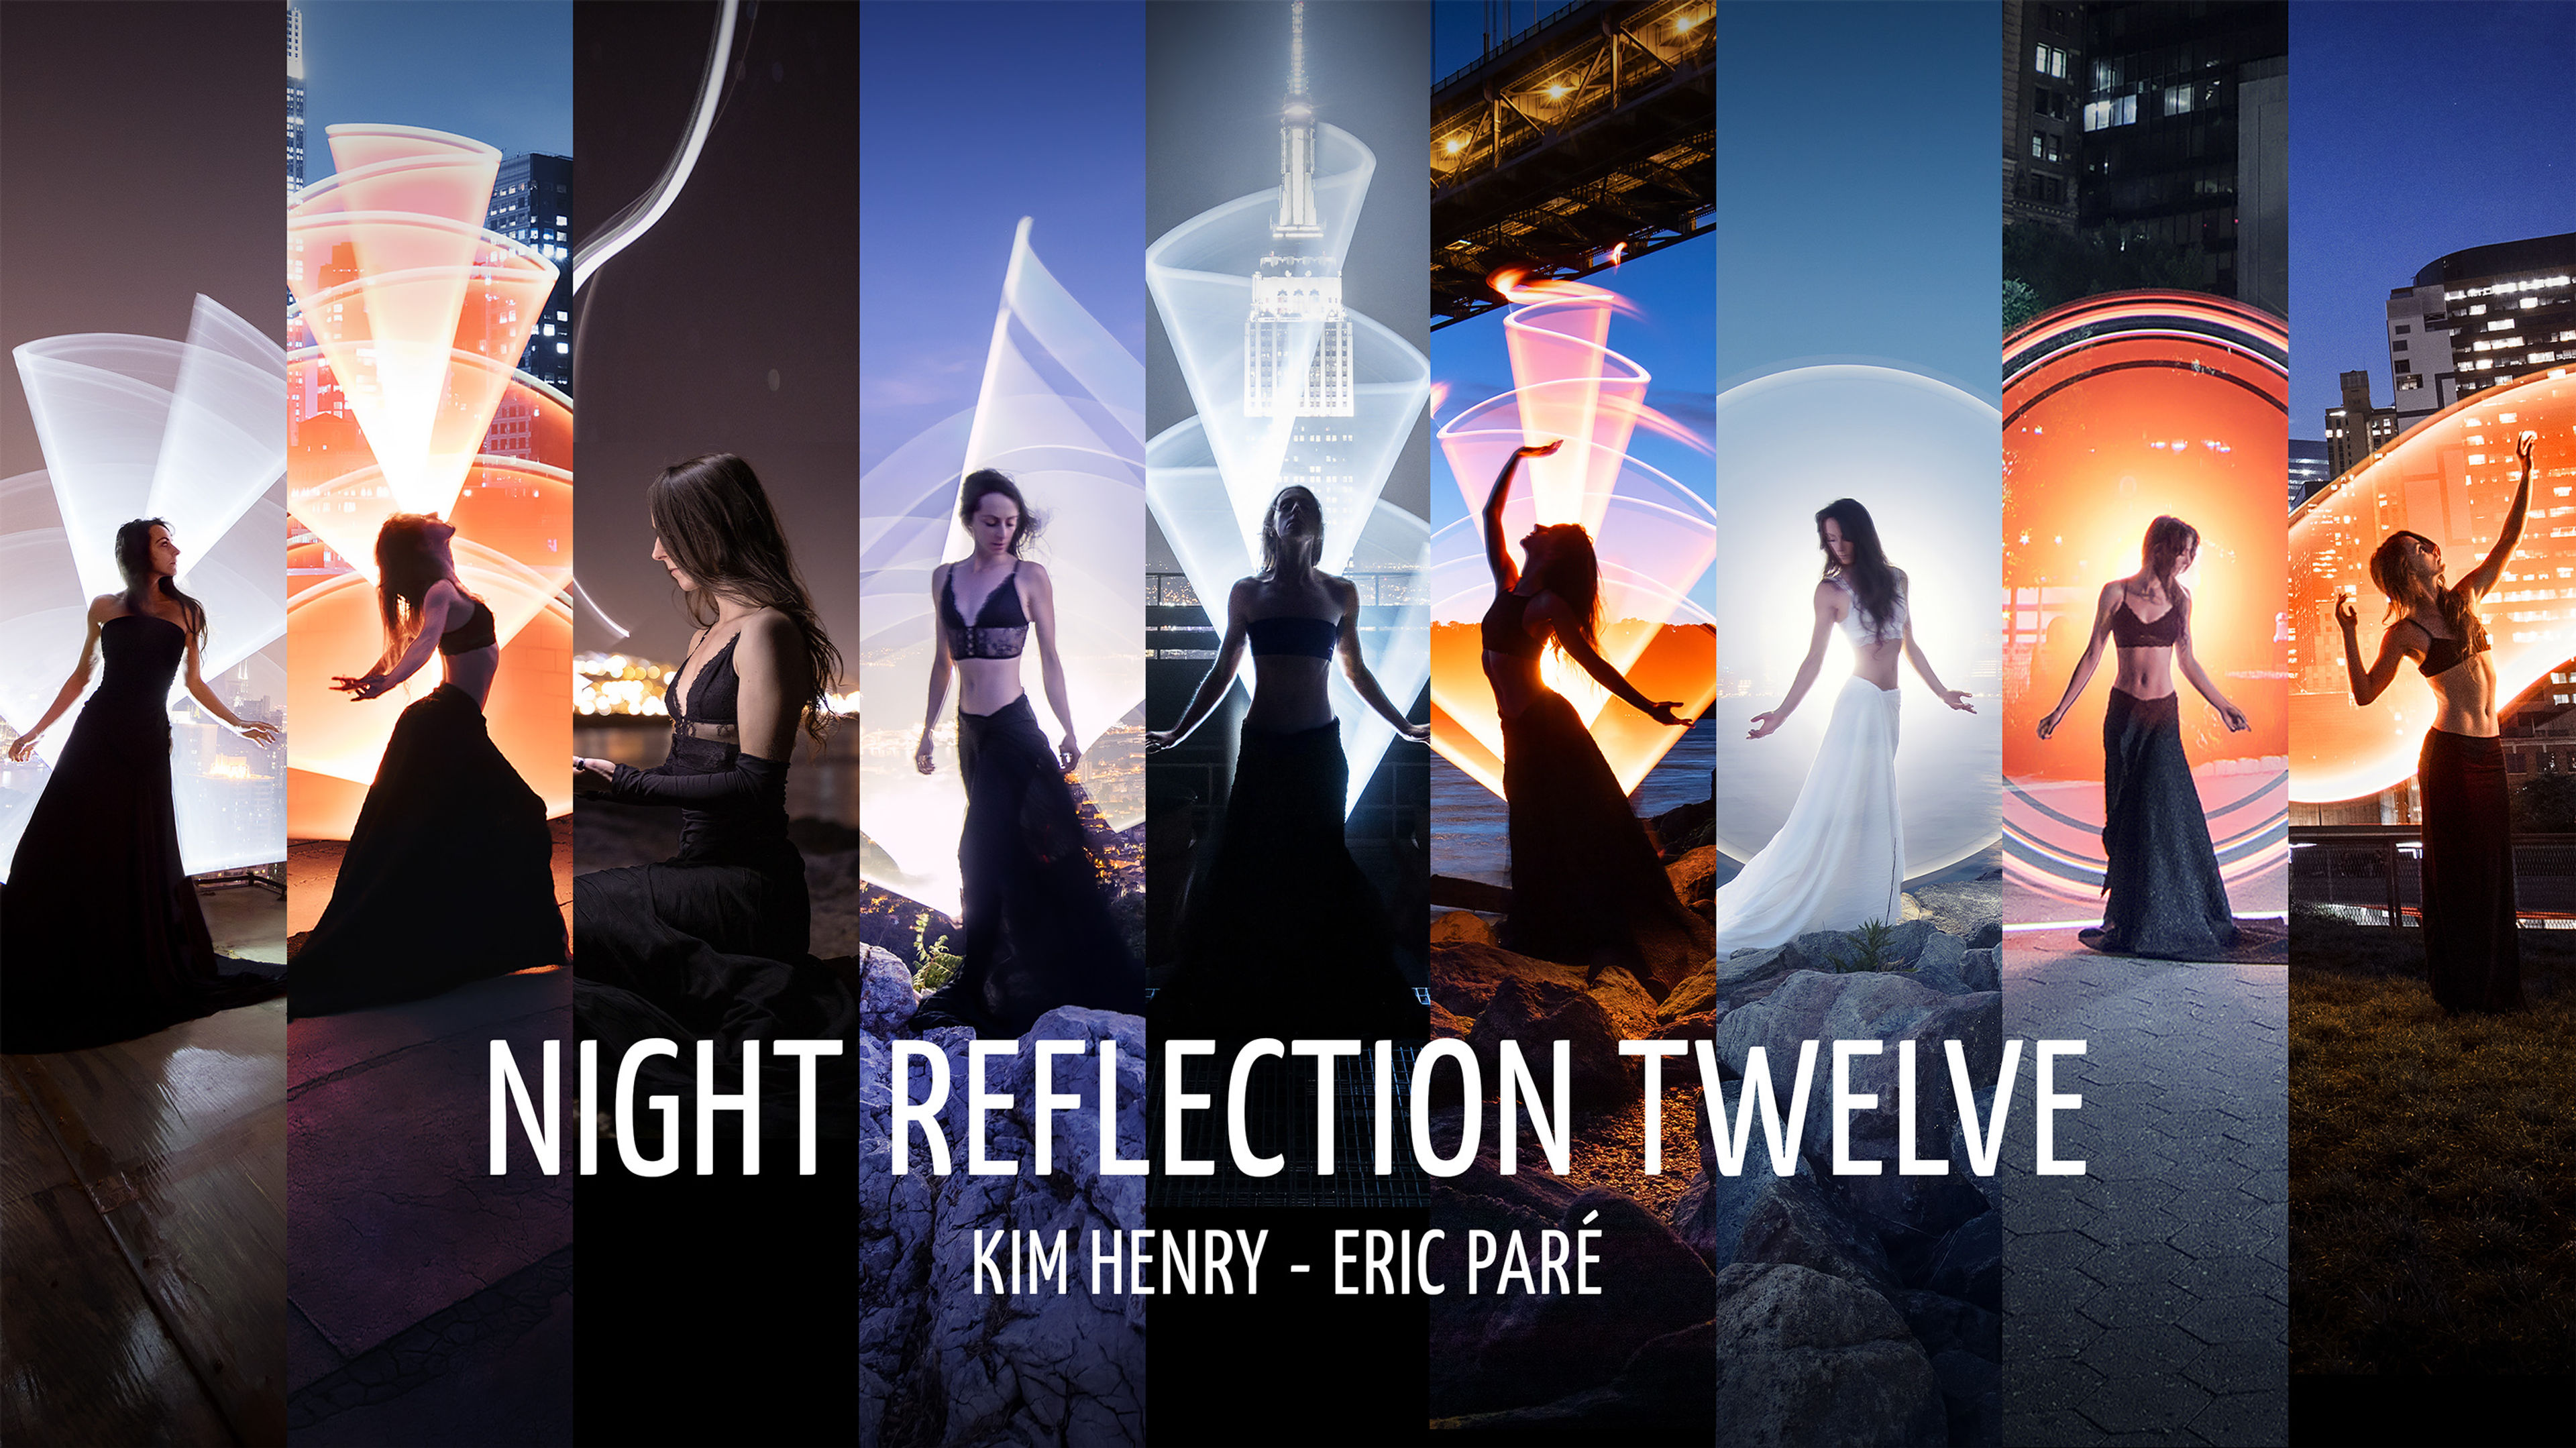 Night Reflection Twelve by Kim Henry & Eric Paré